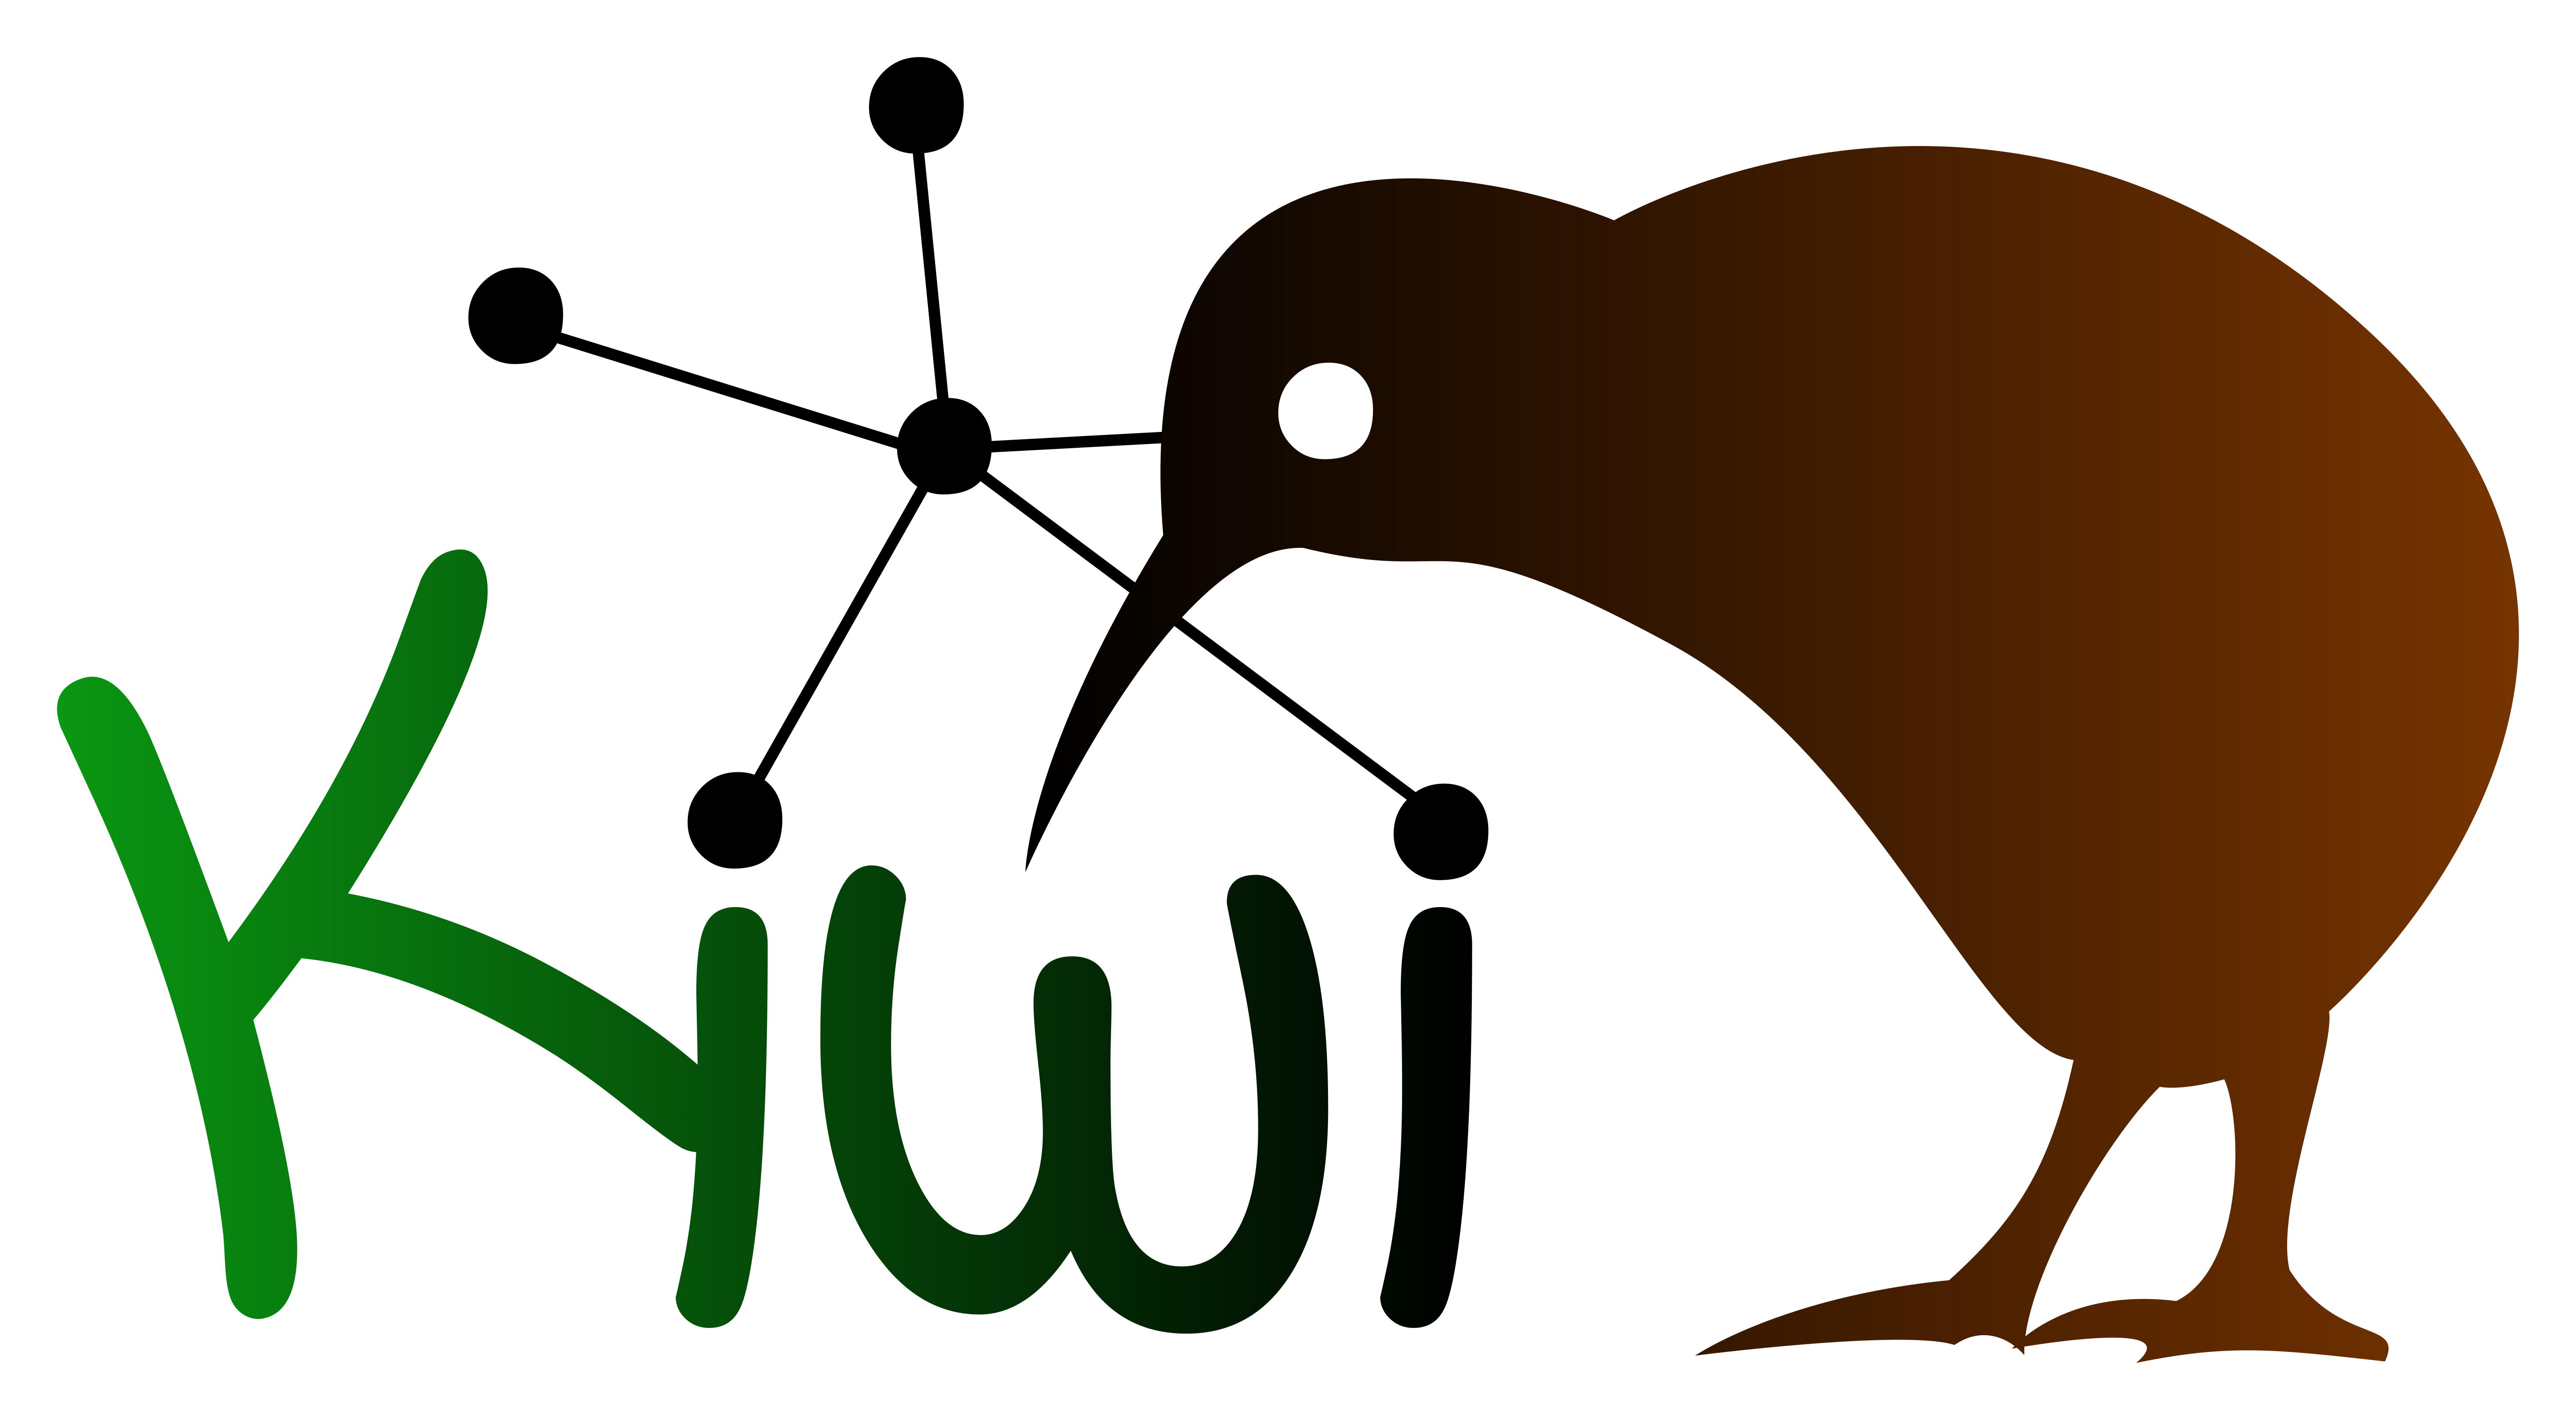 _images/kiwi_logo.png